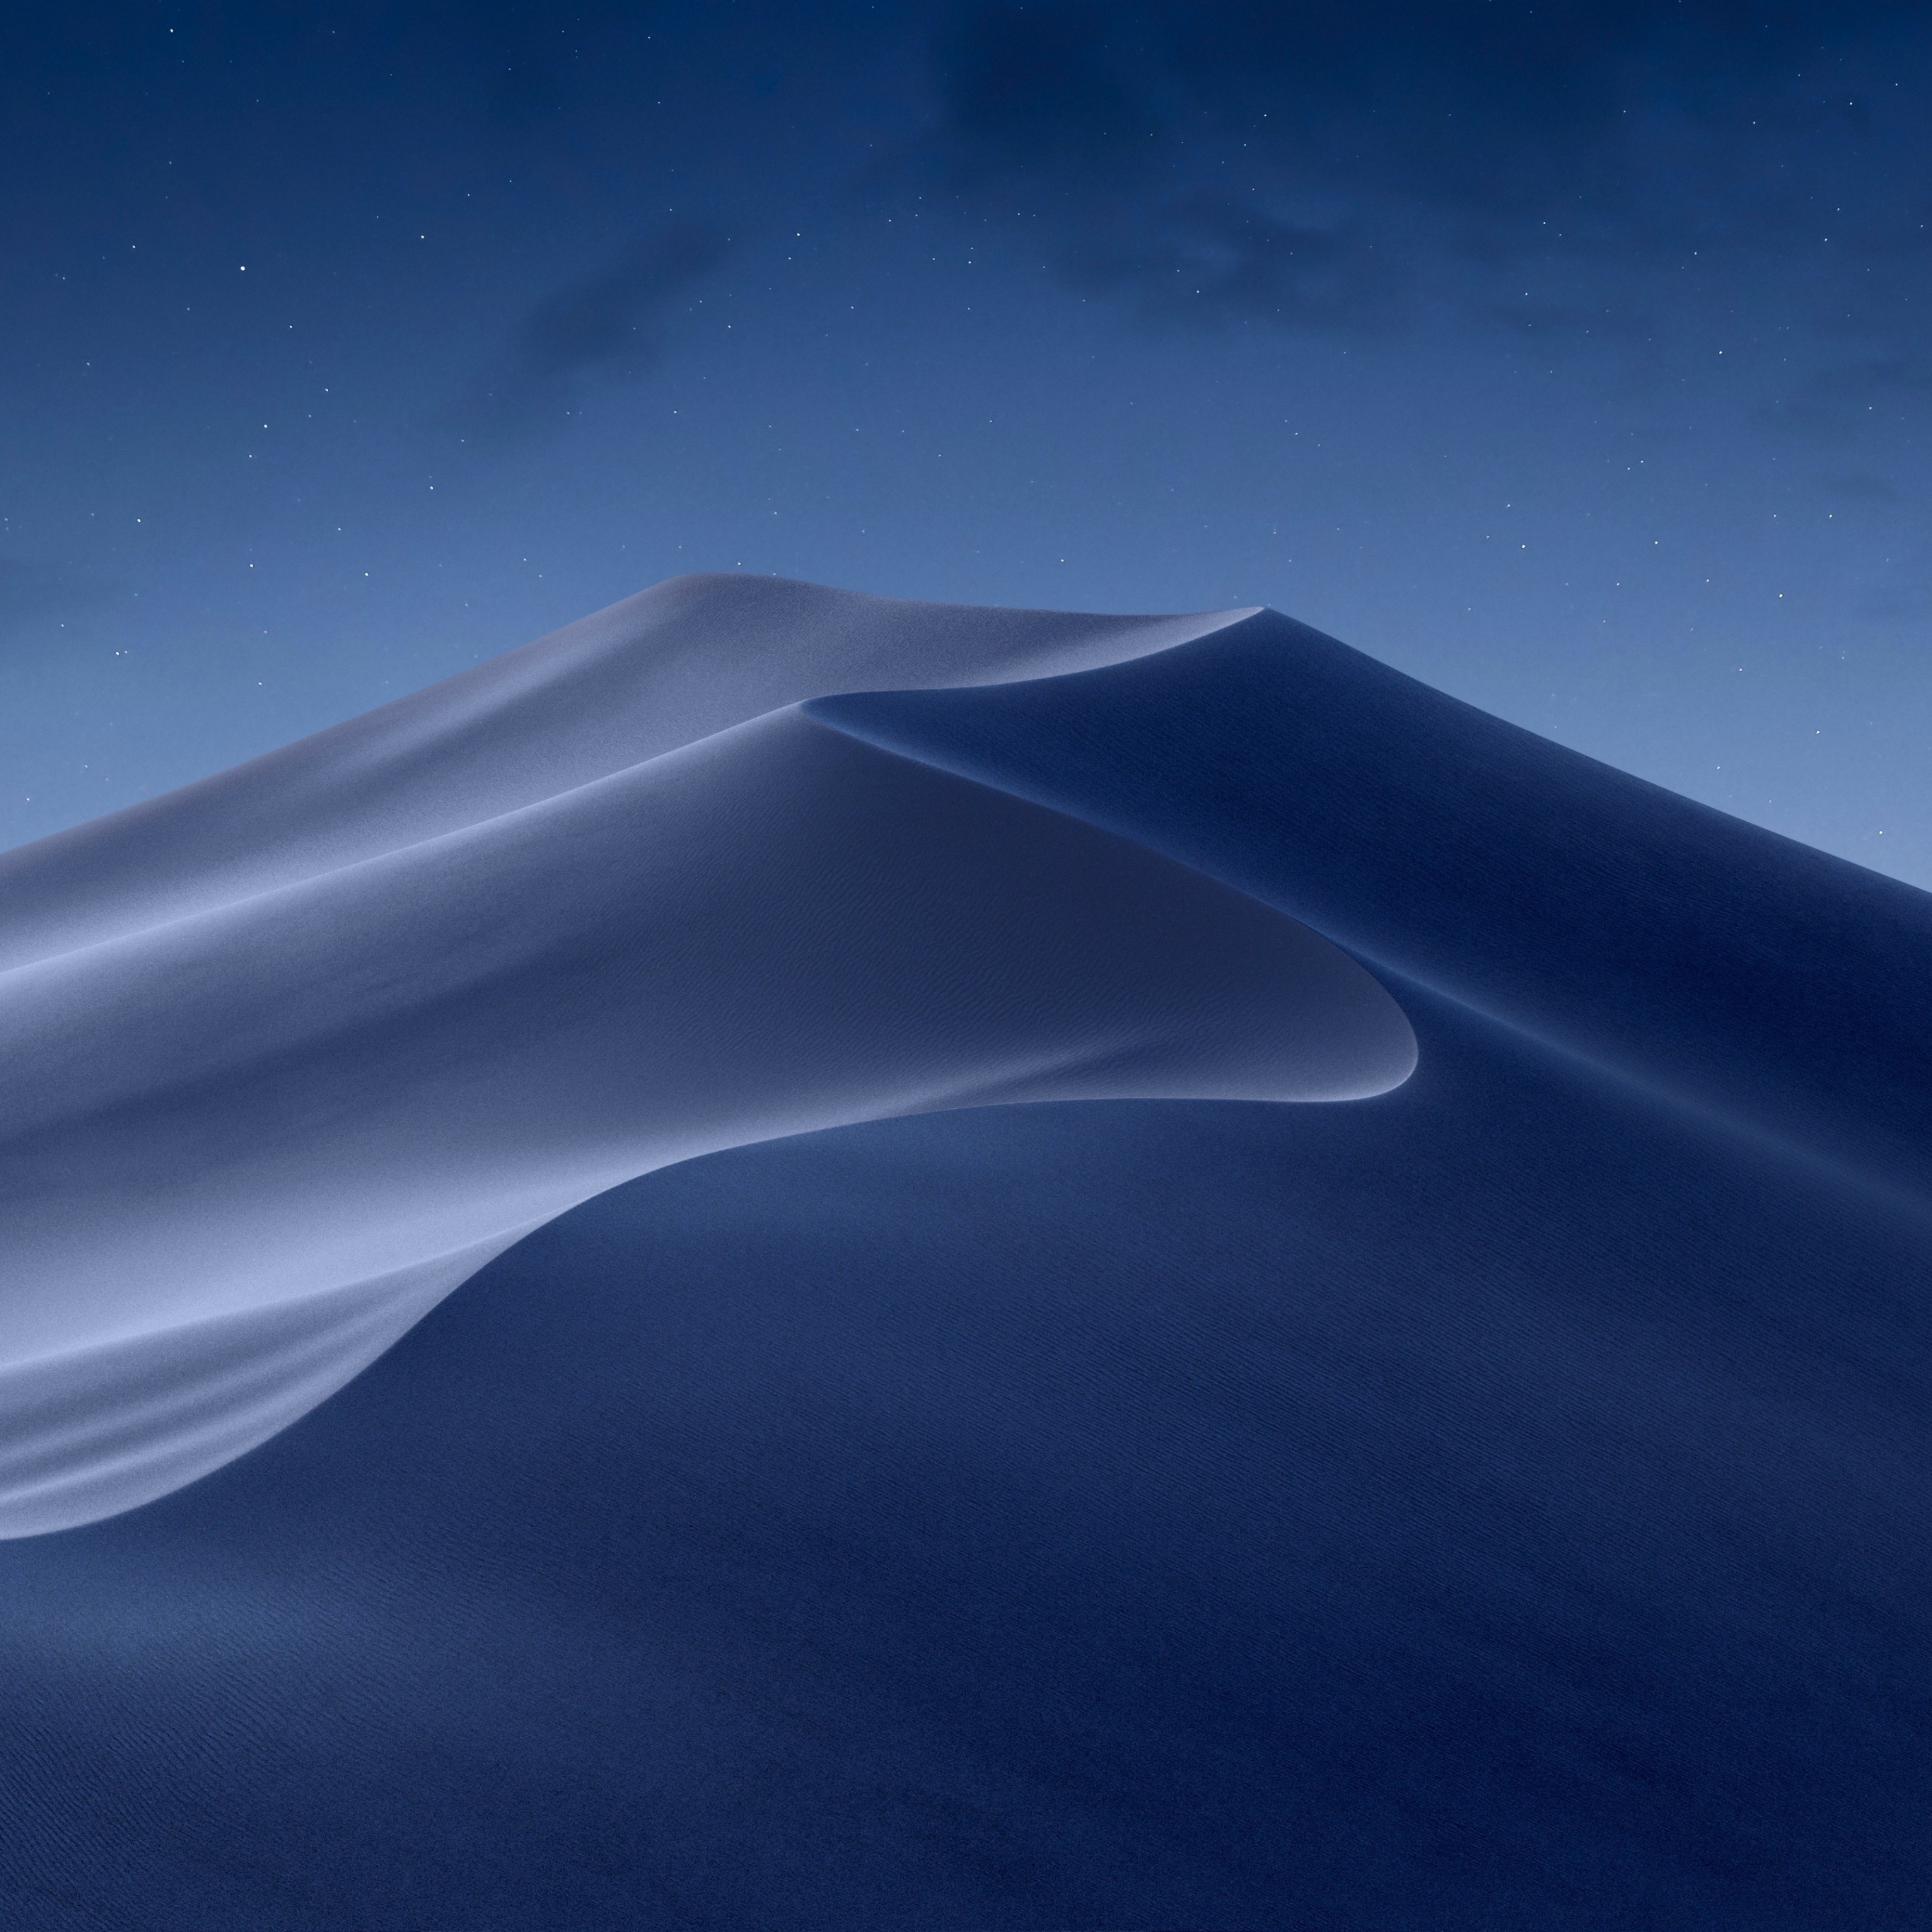 macOS Mojave Wallpaper 4K, Moon light, Sand Dunes